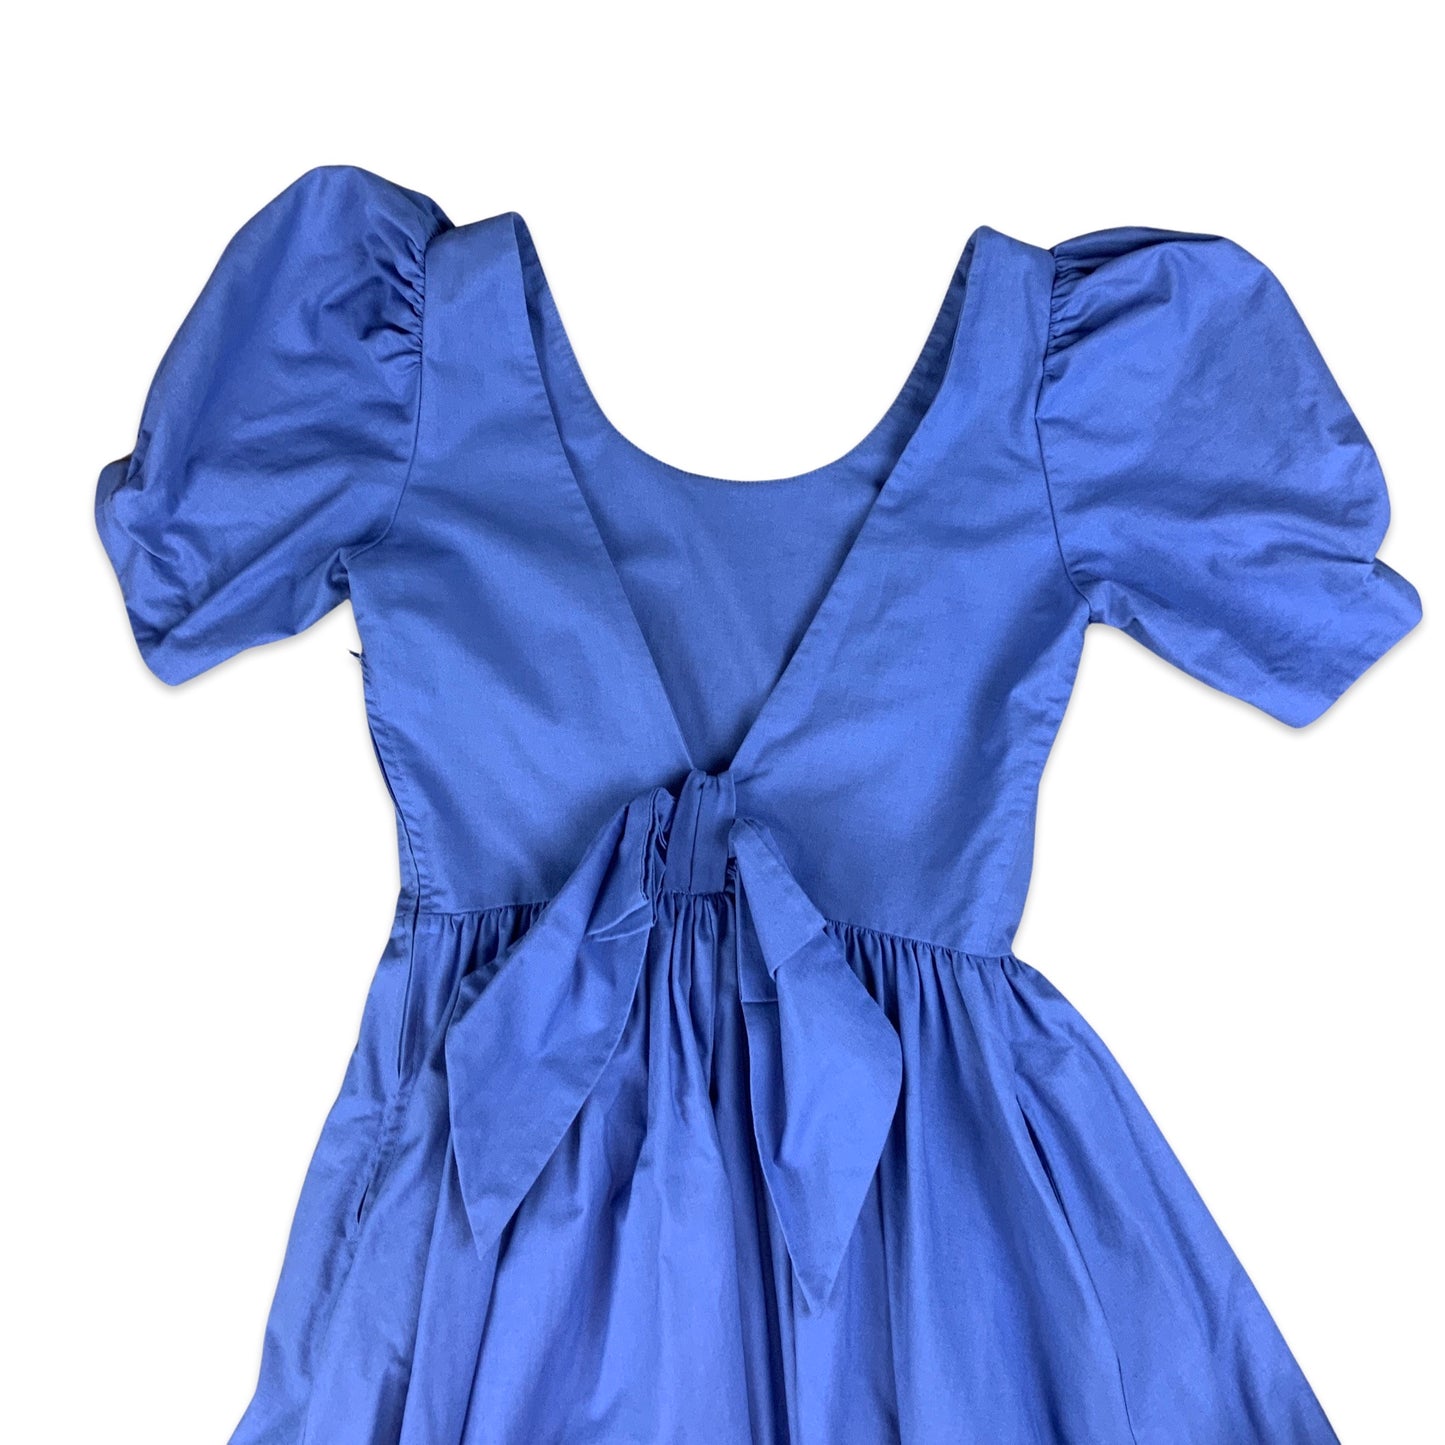 Vintage 80s Laura Ashley Blue Bouffant Party Dress 8 10